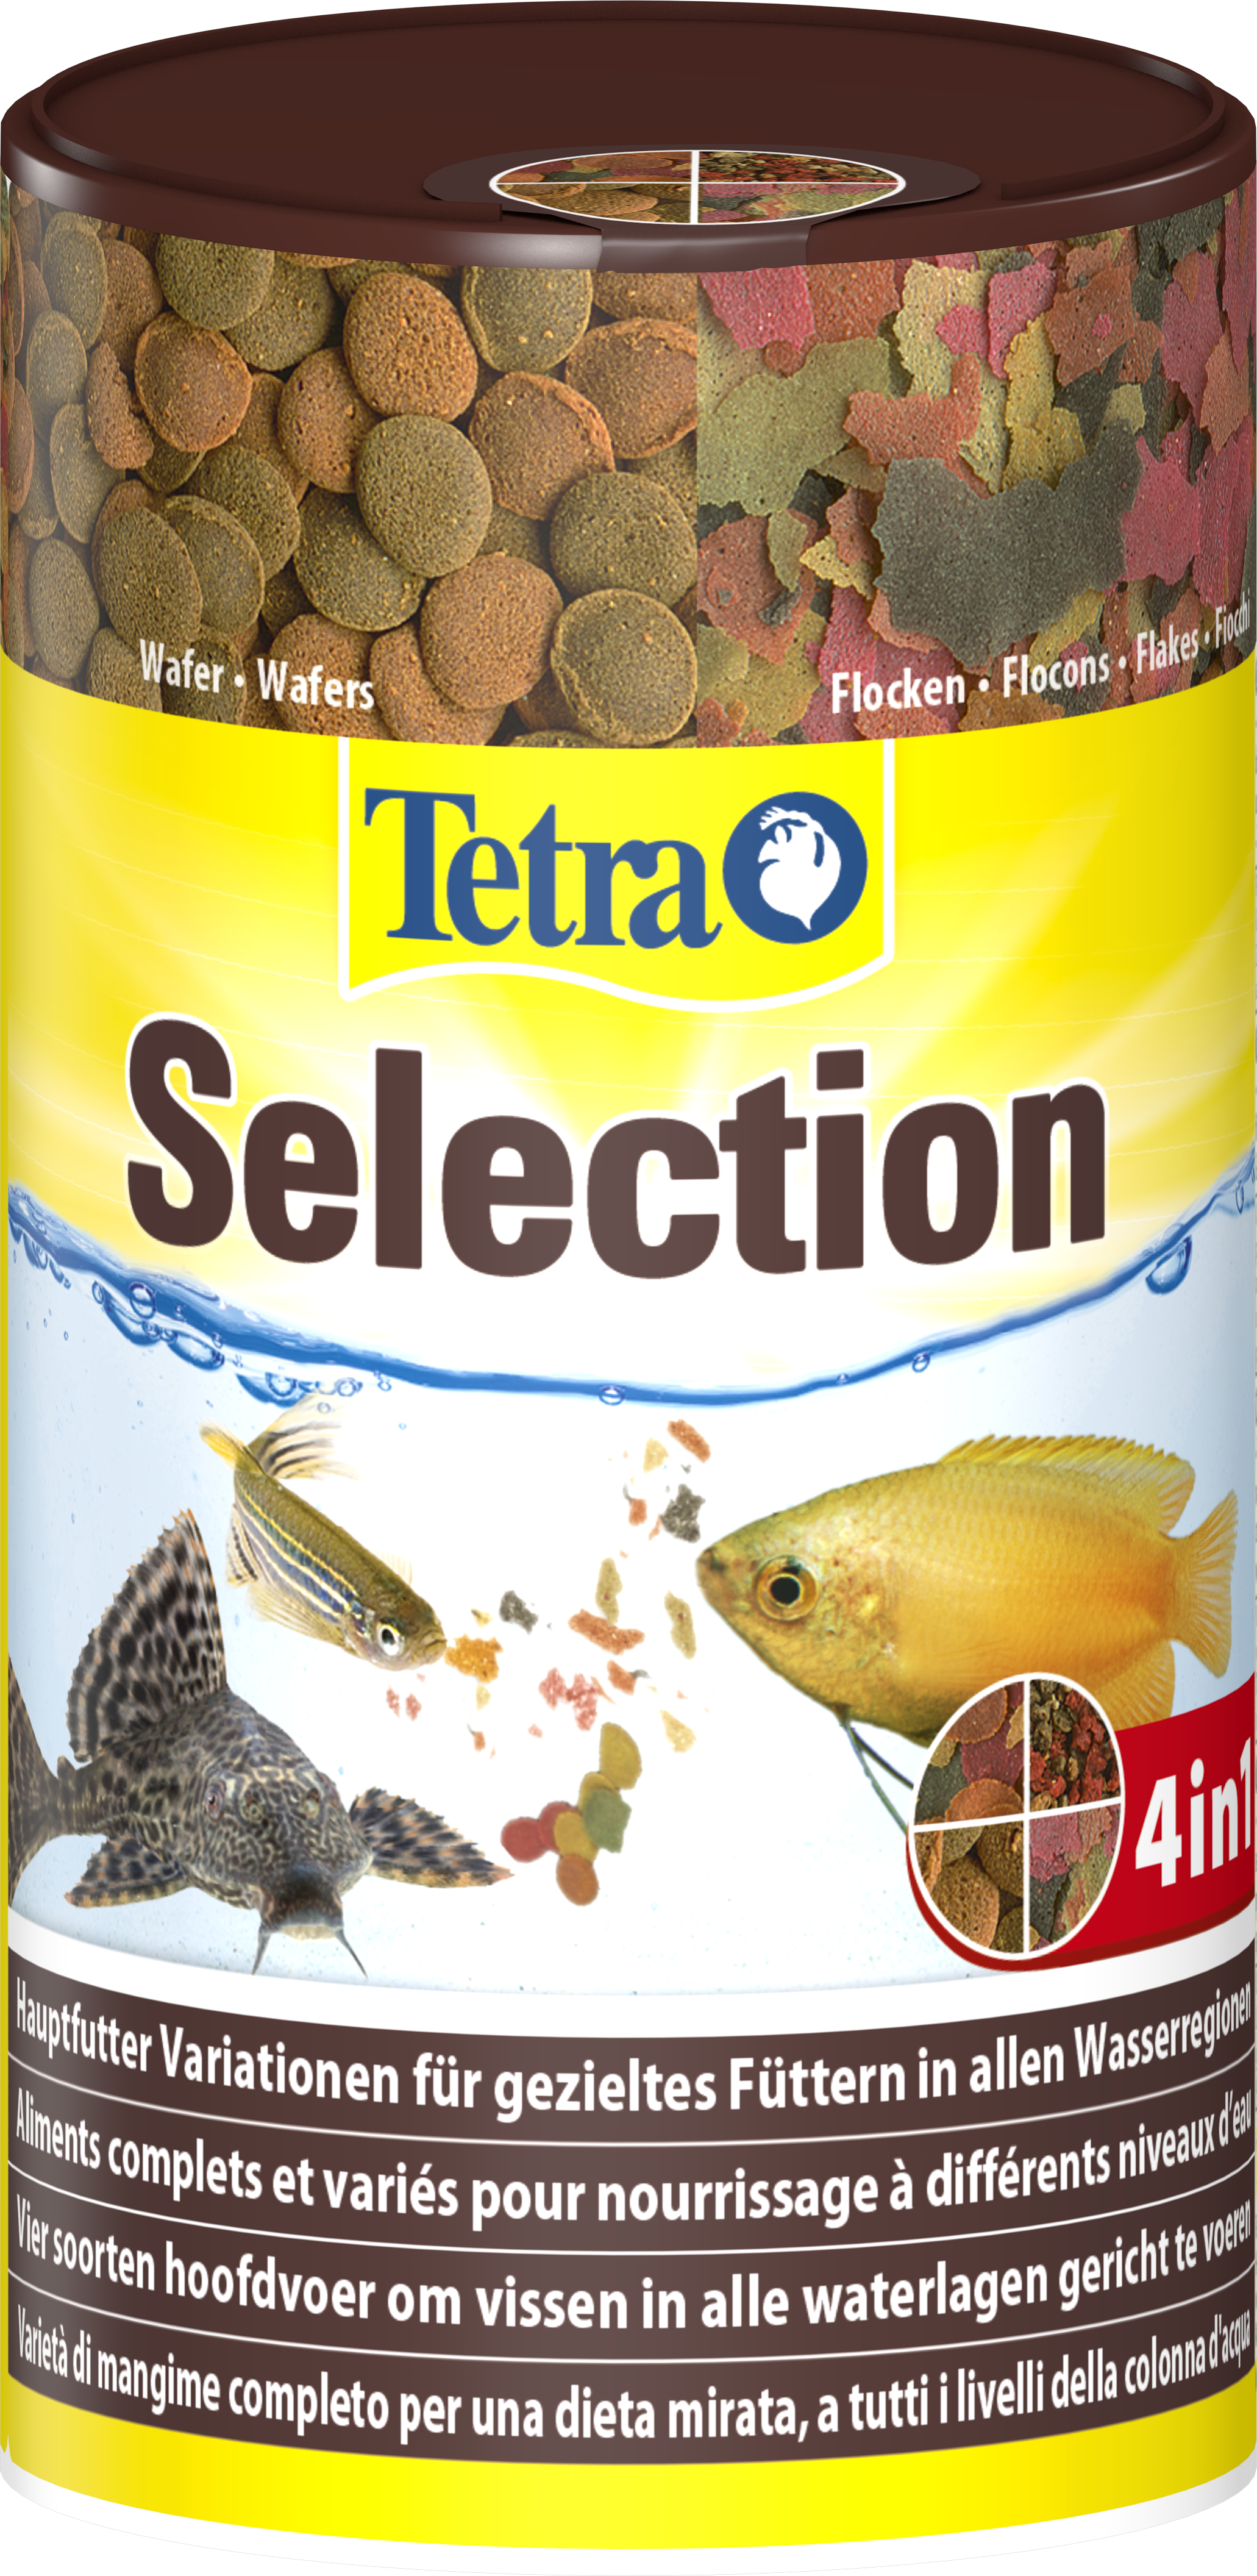 Alimentation TetraMin Granules pour poissons